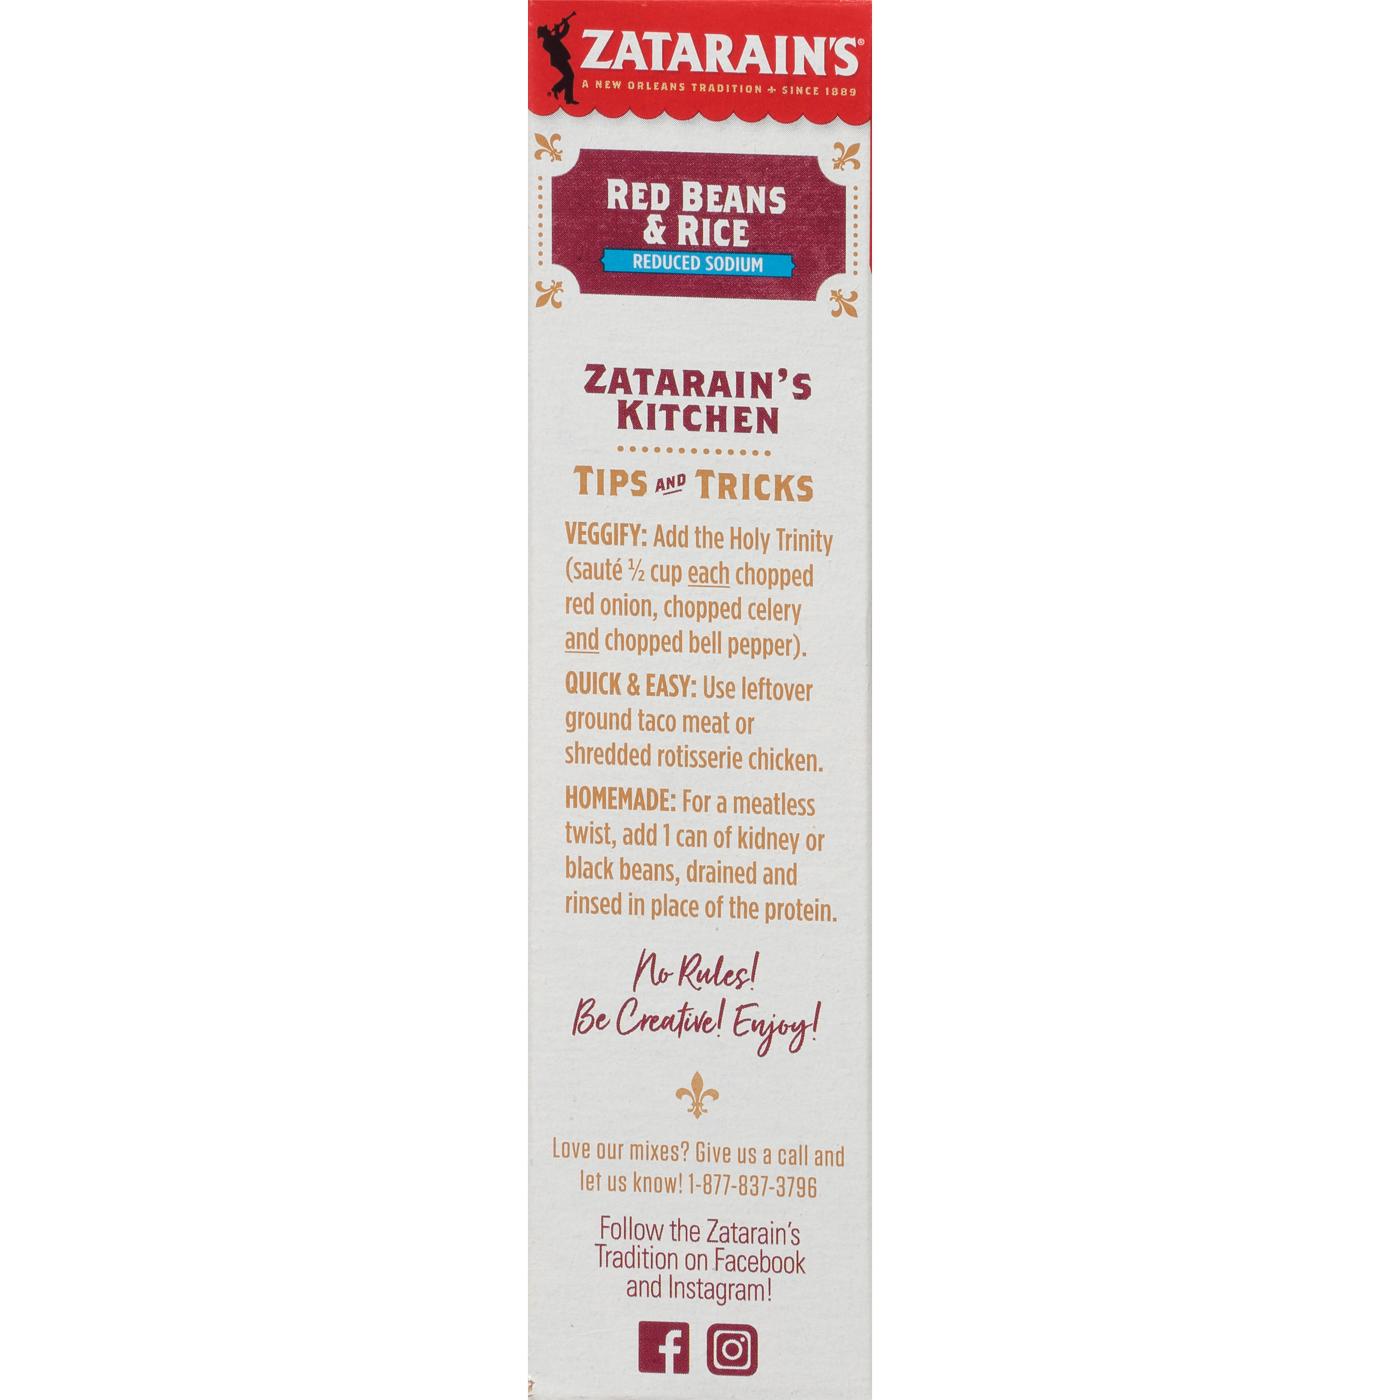 Zatarain's Reduced Sodium Red Beans & Rice; image 4 of 4